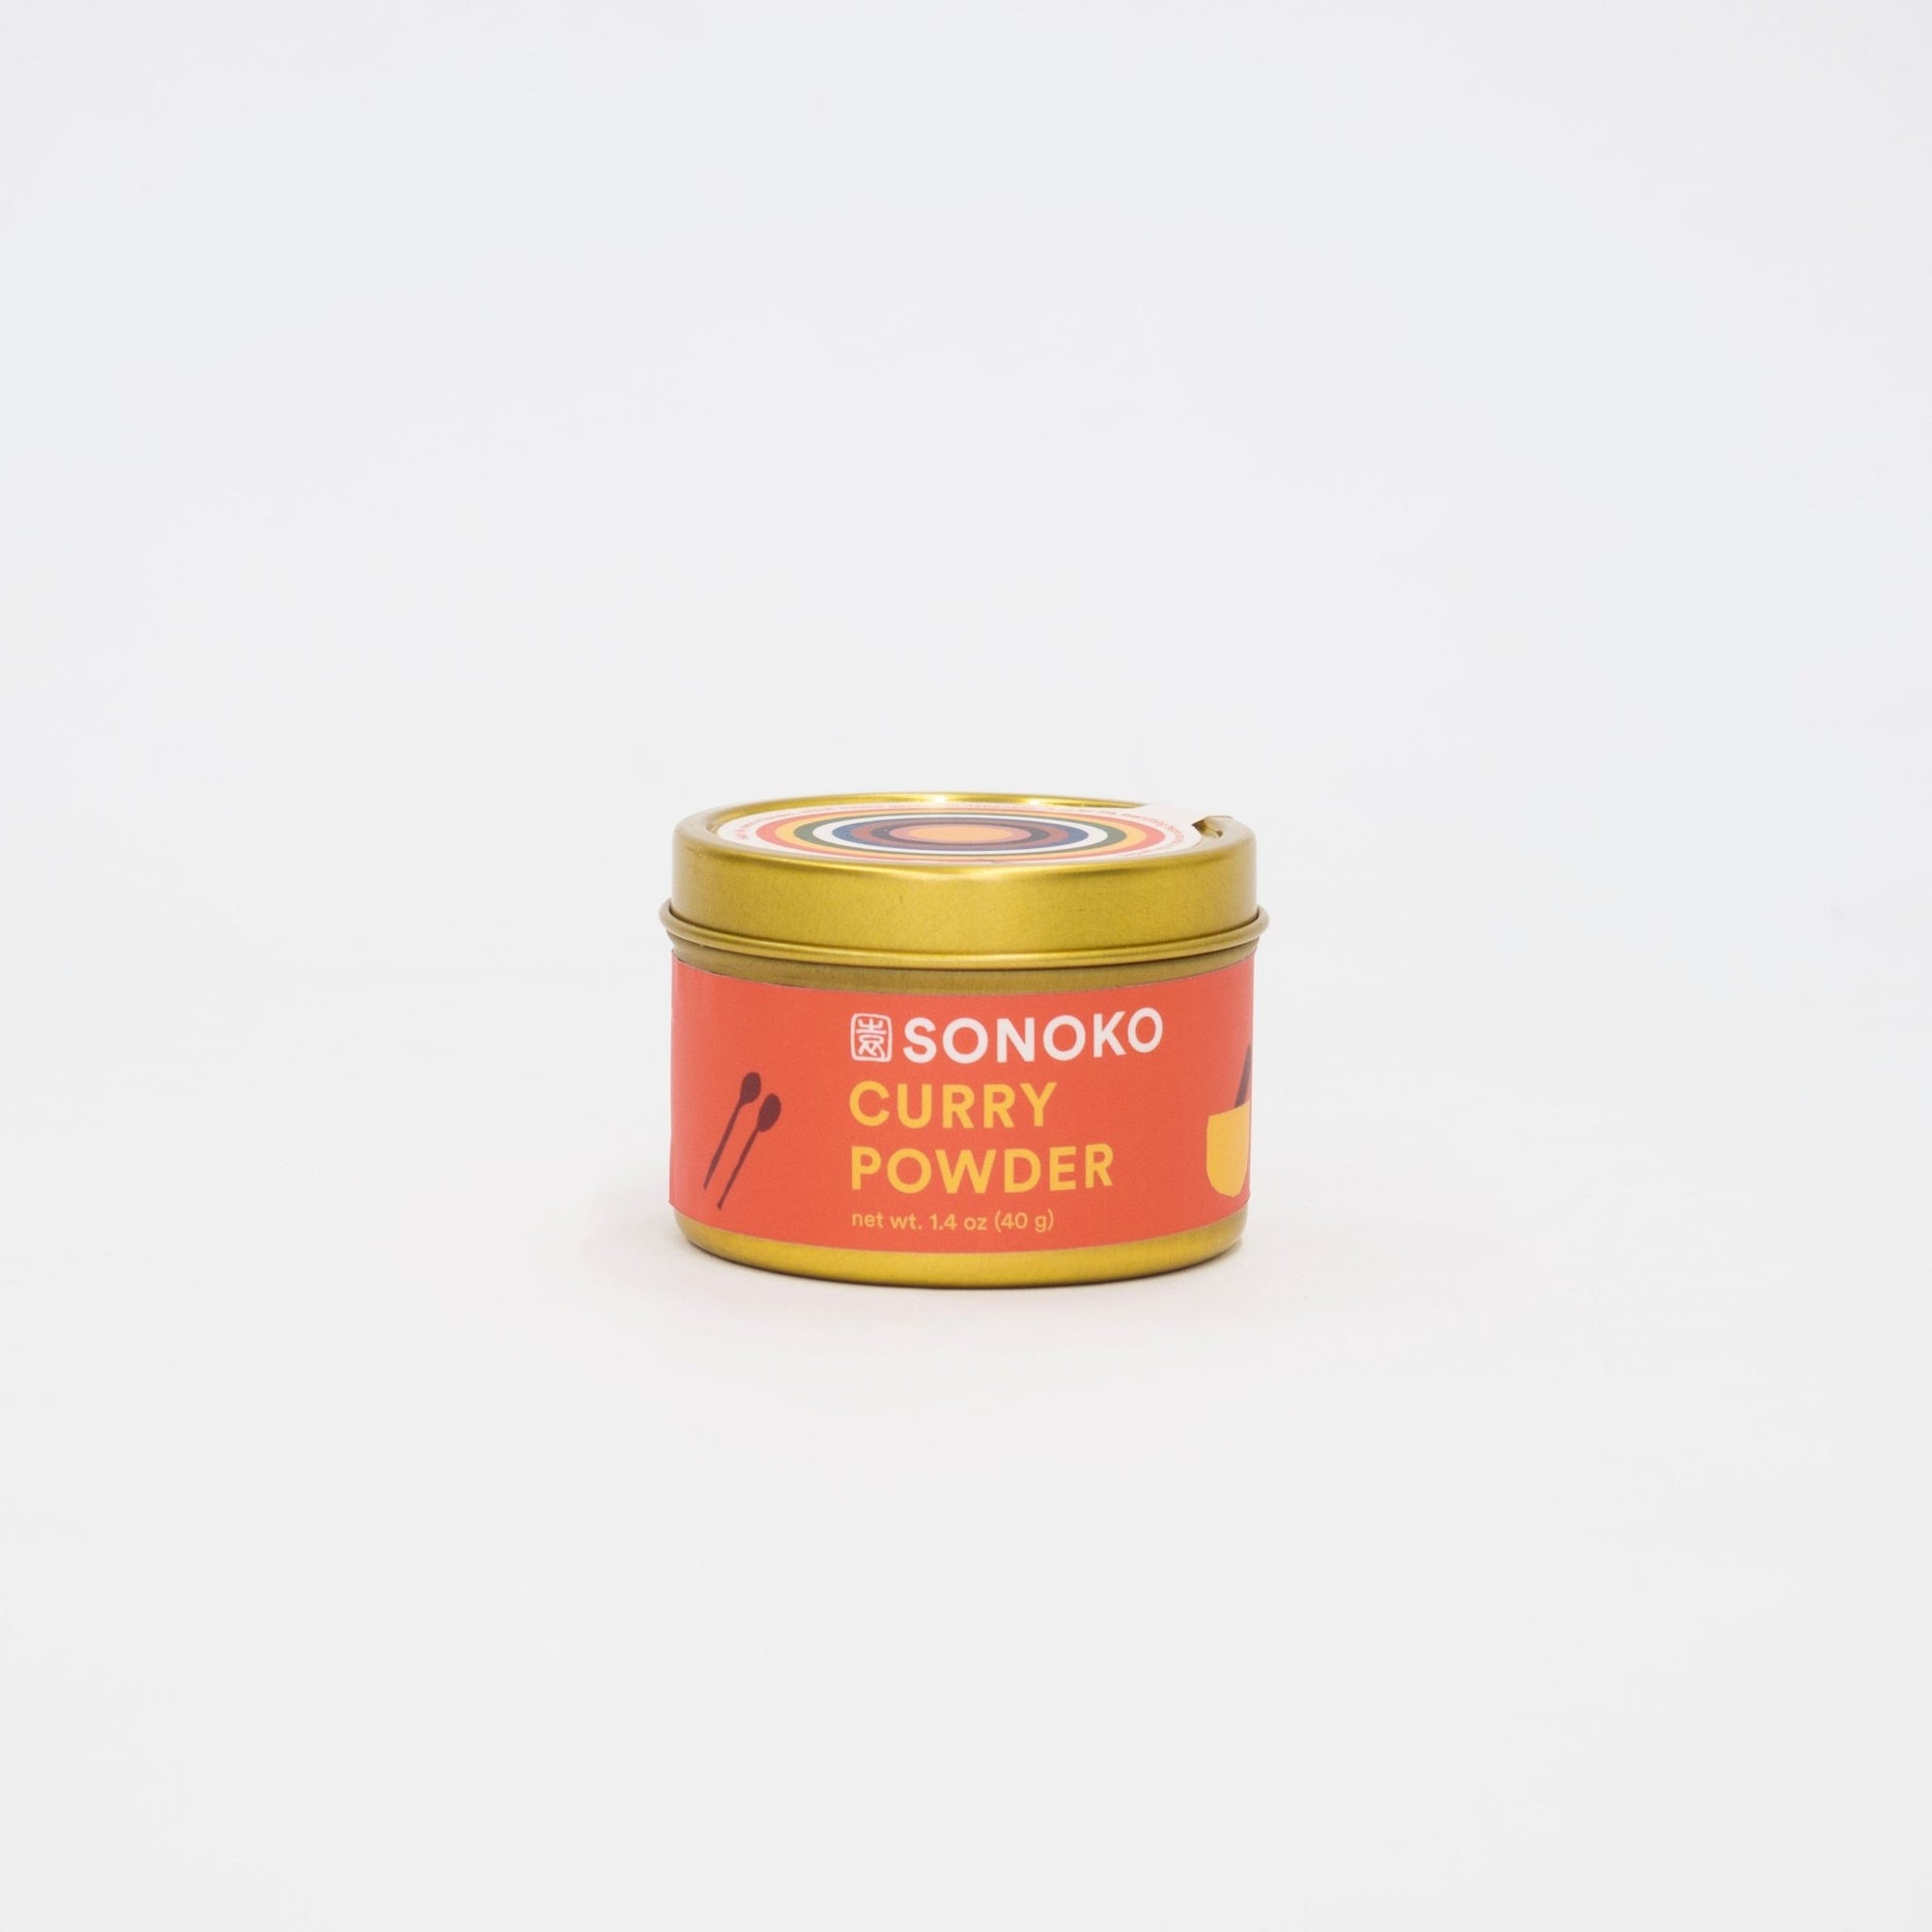 Sonoko Curry Powder Tin | Tortoise General Store